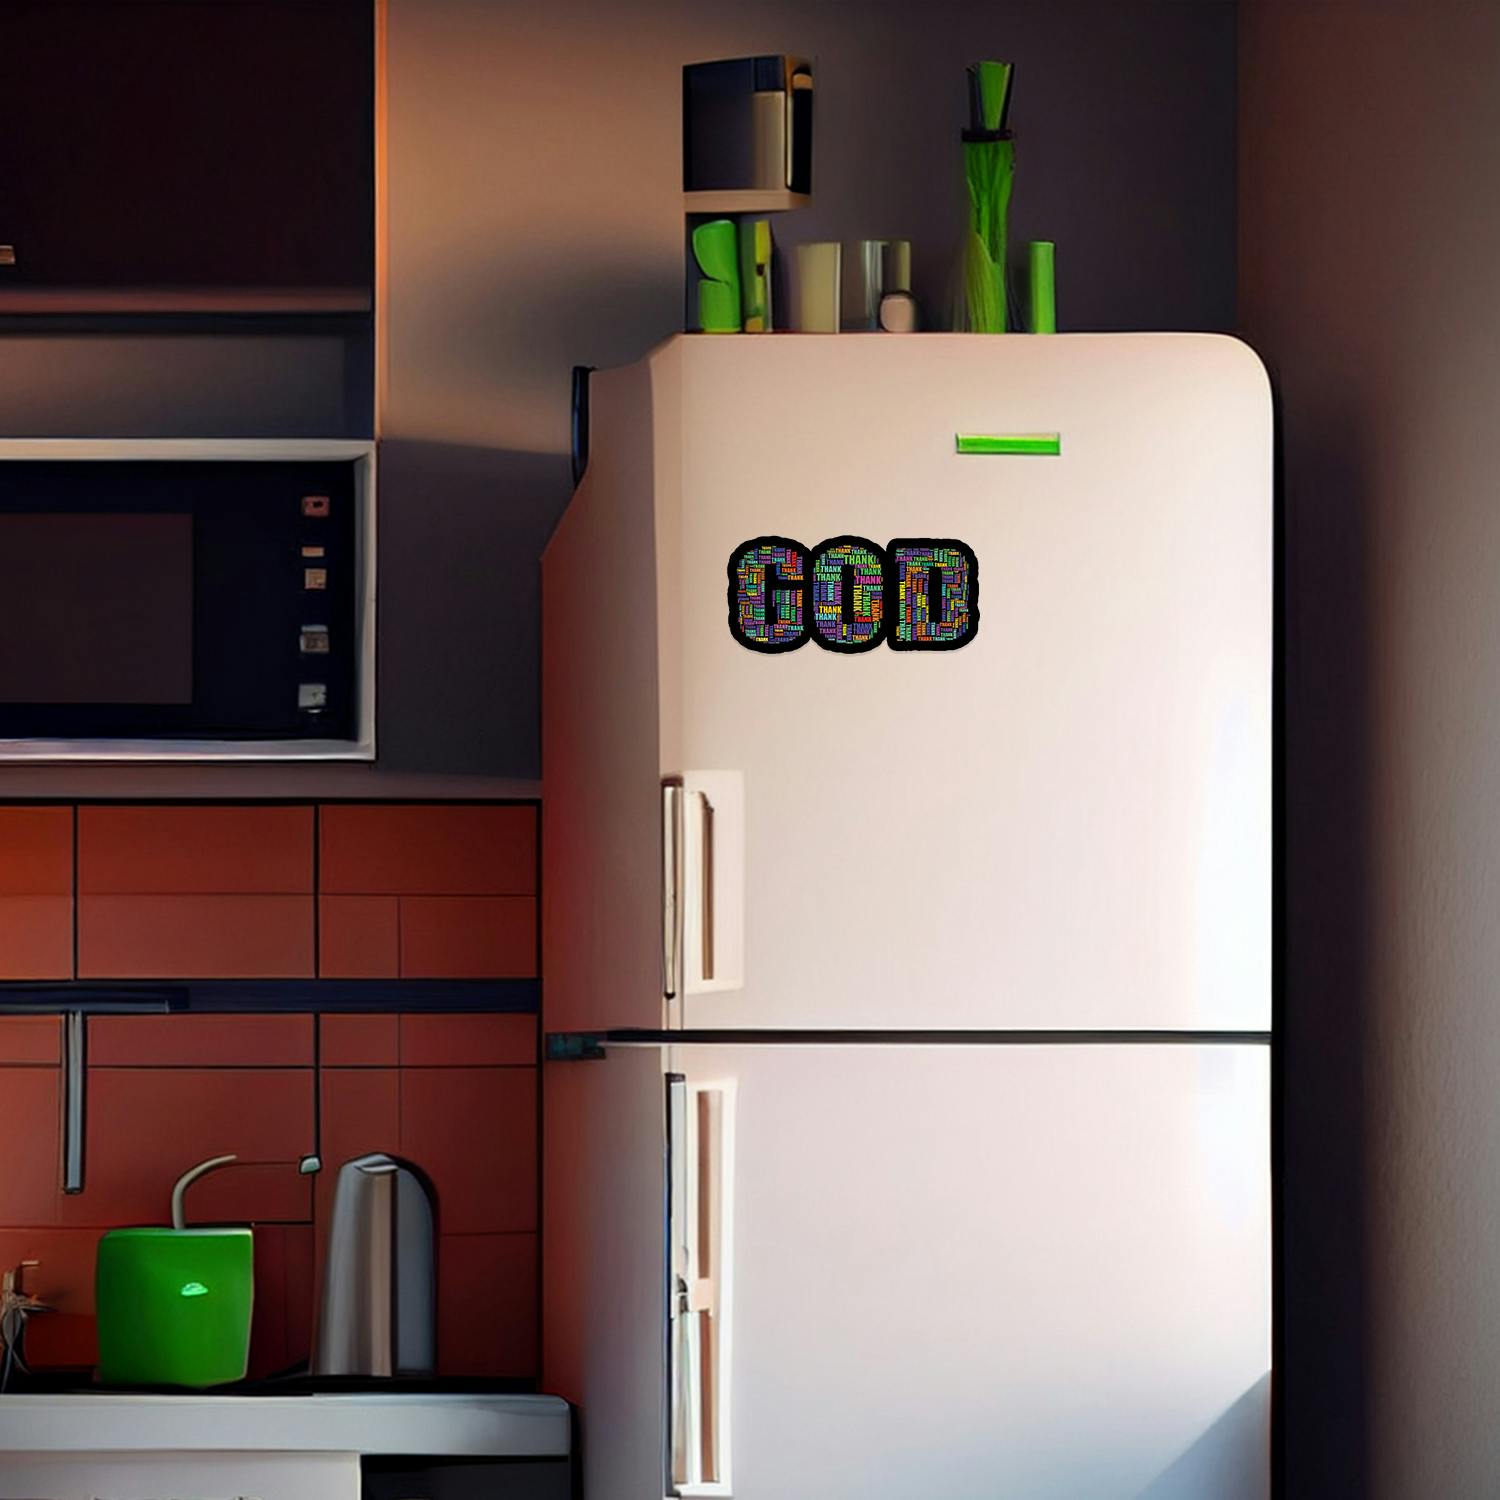 Colorful GOD Refrigerator Magnet - Inspirational Decor for Your Home